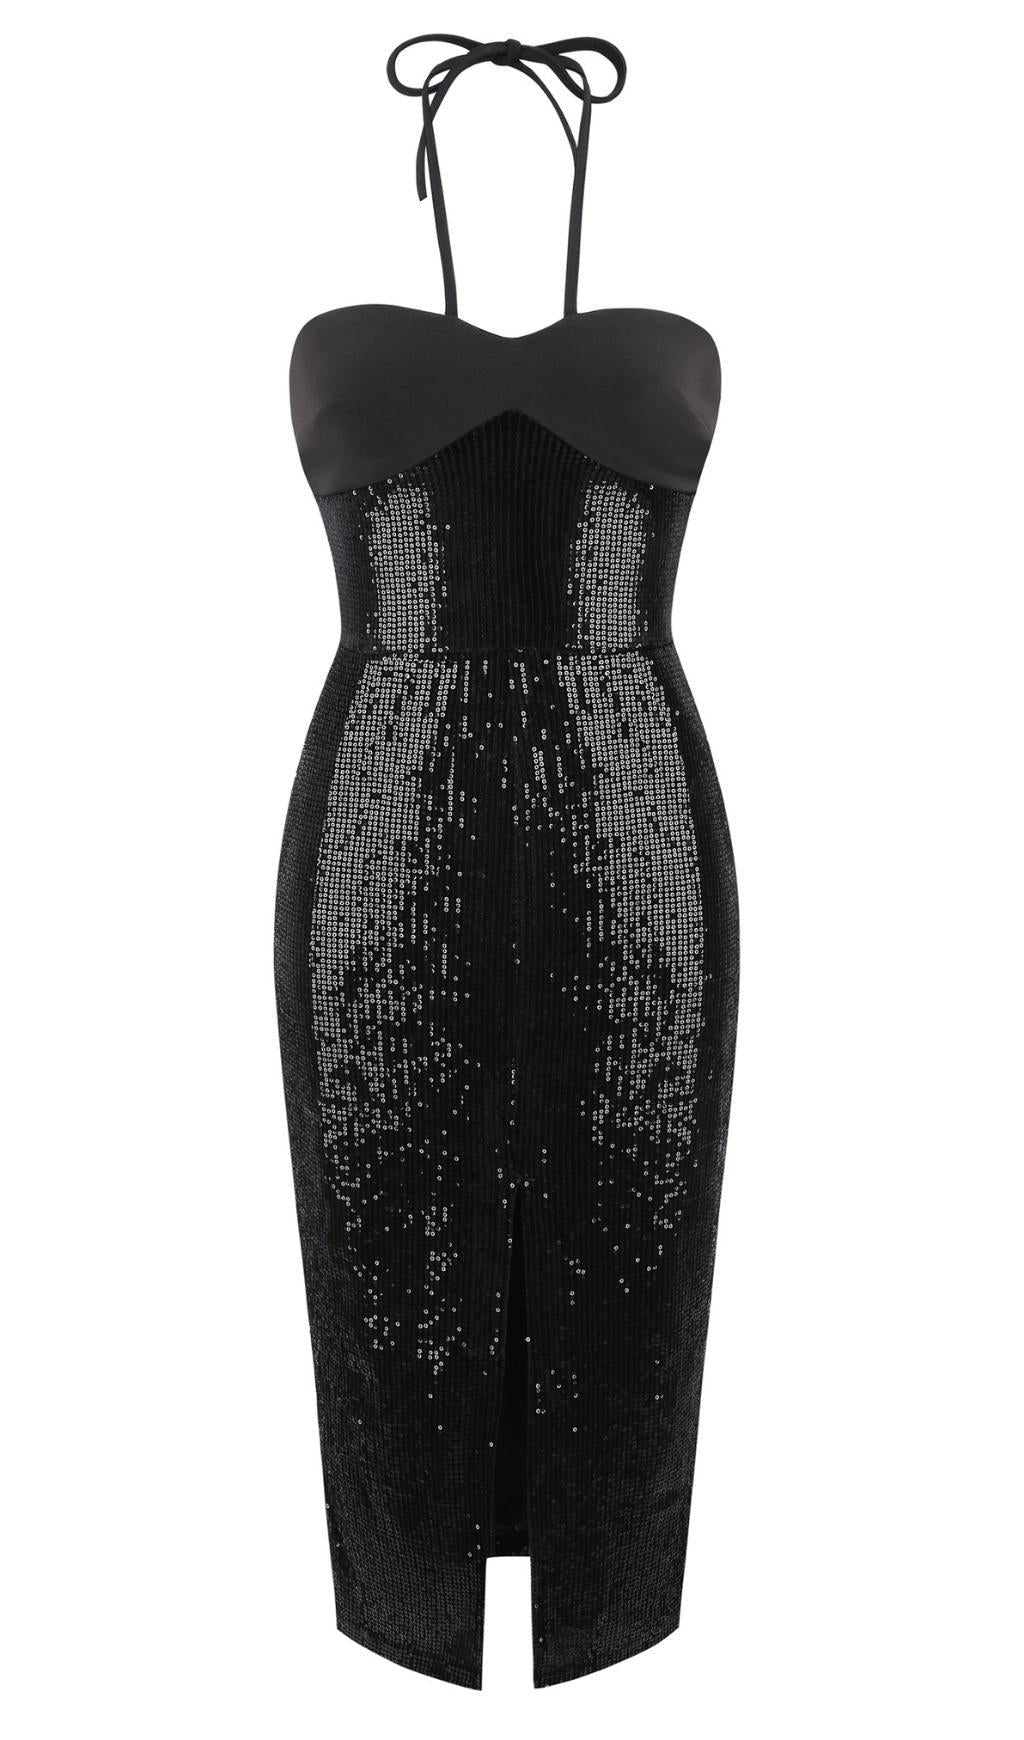 Cut Out High Split Maxi Dress in Black